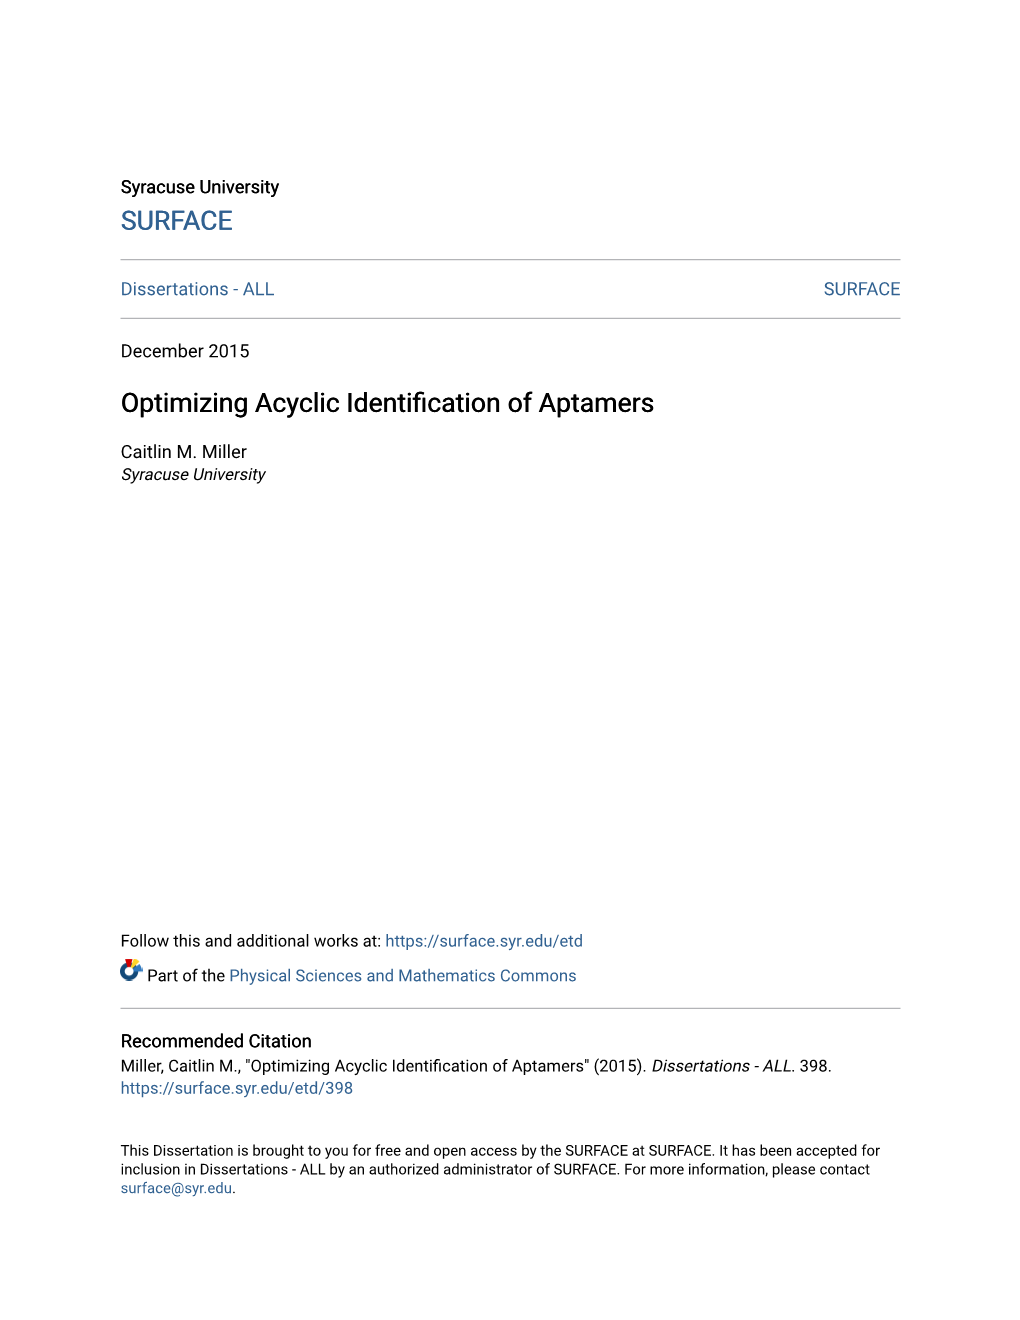 Optimizing Acyclic Identification of Aptamers